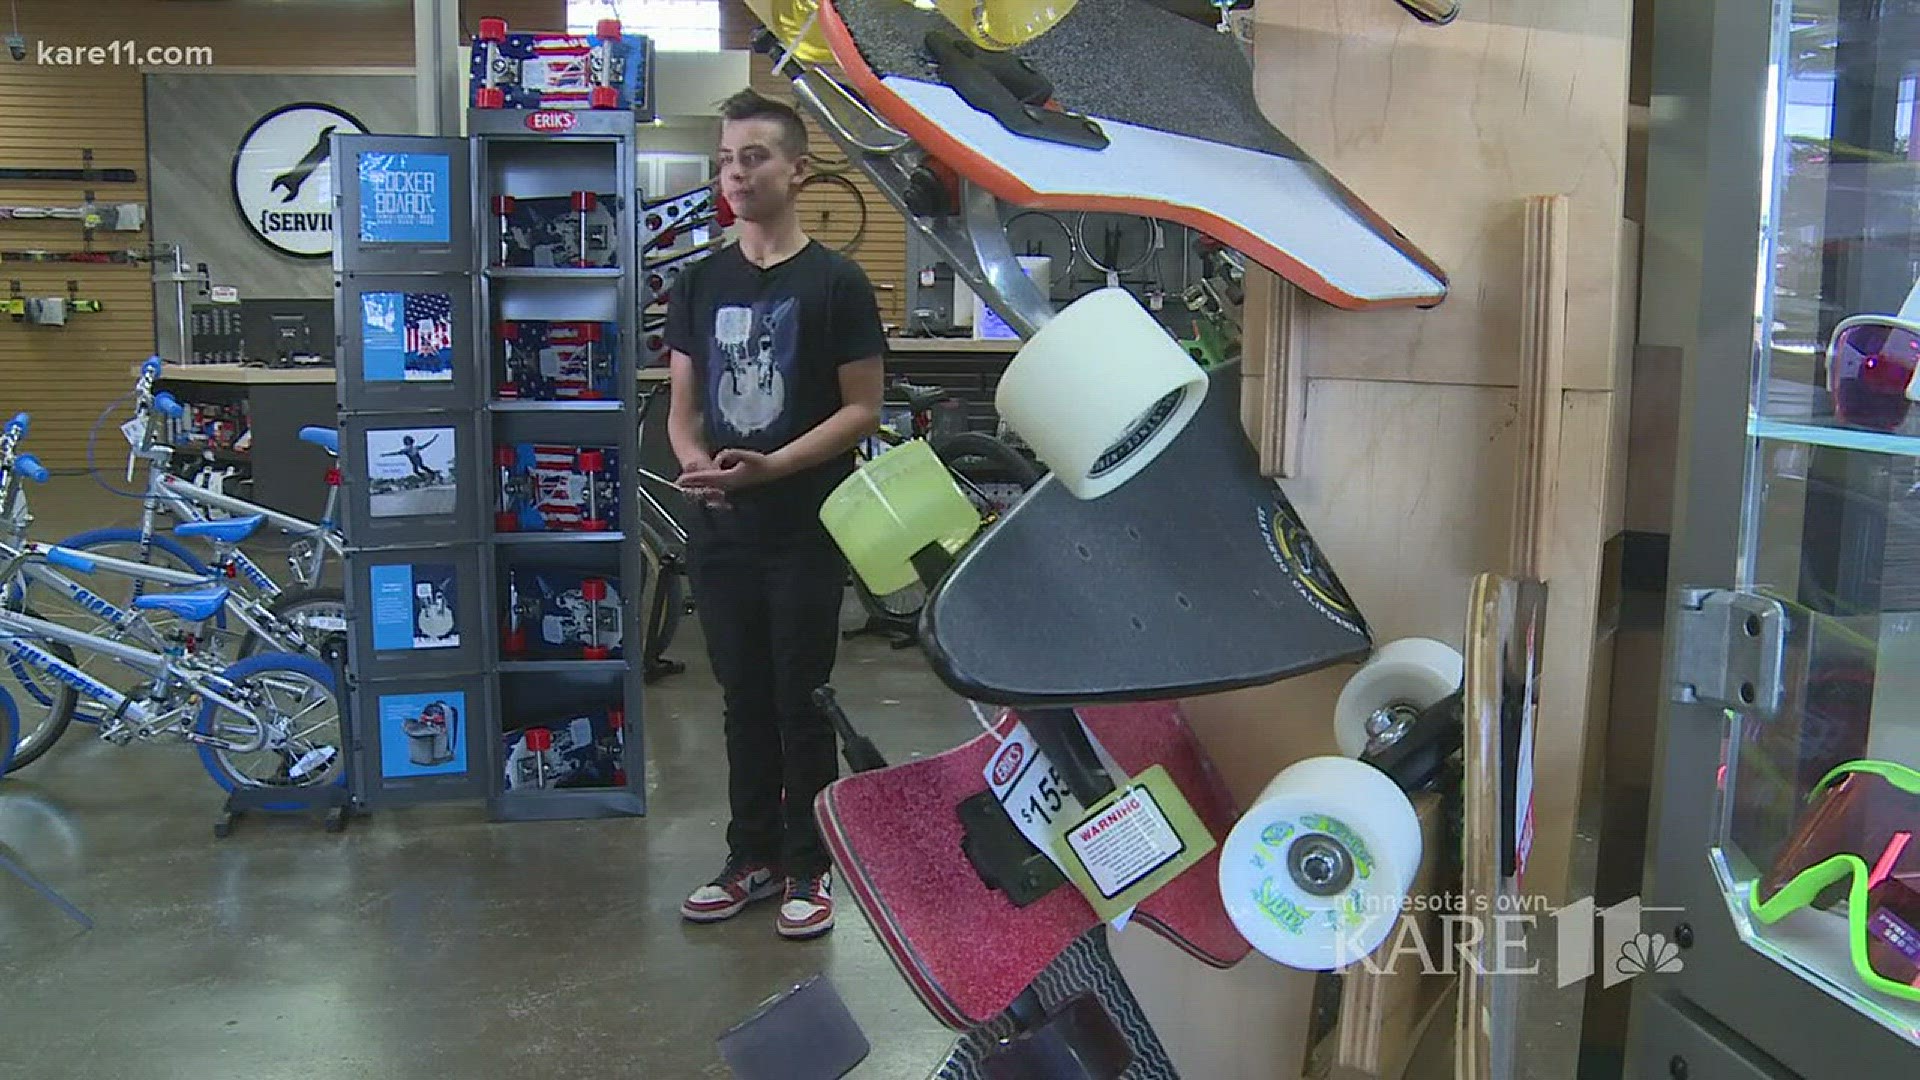 Erik of 'Erik's Bike Shop' welcomes young skateboard inventor